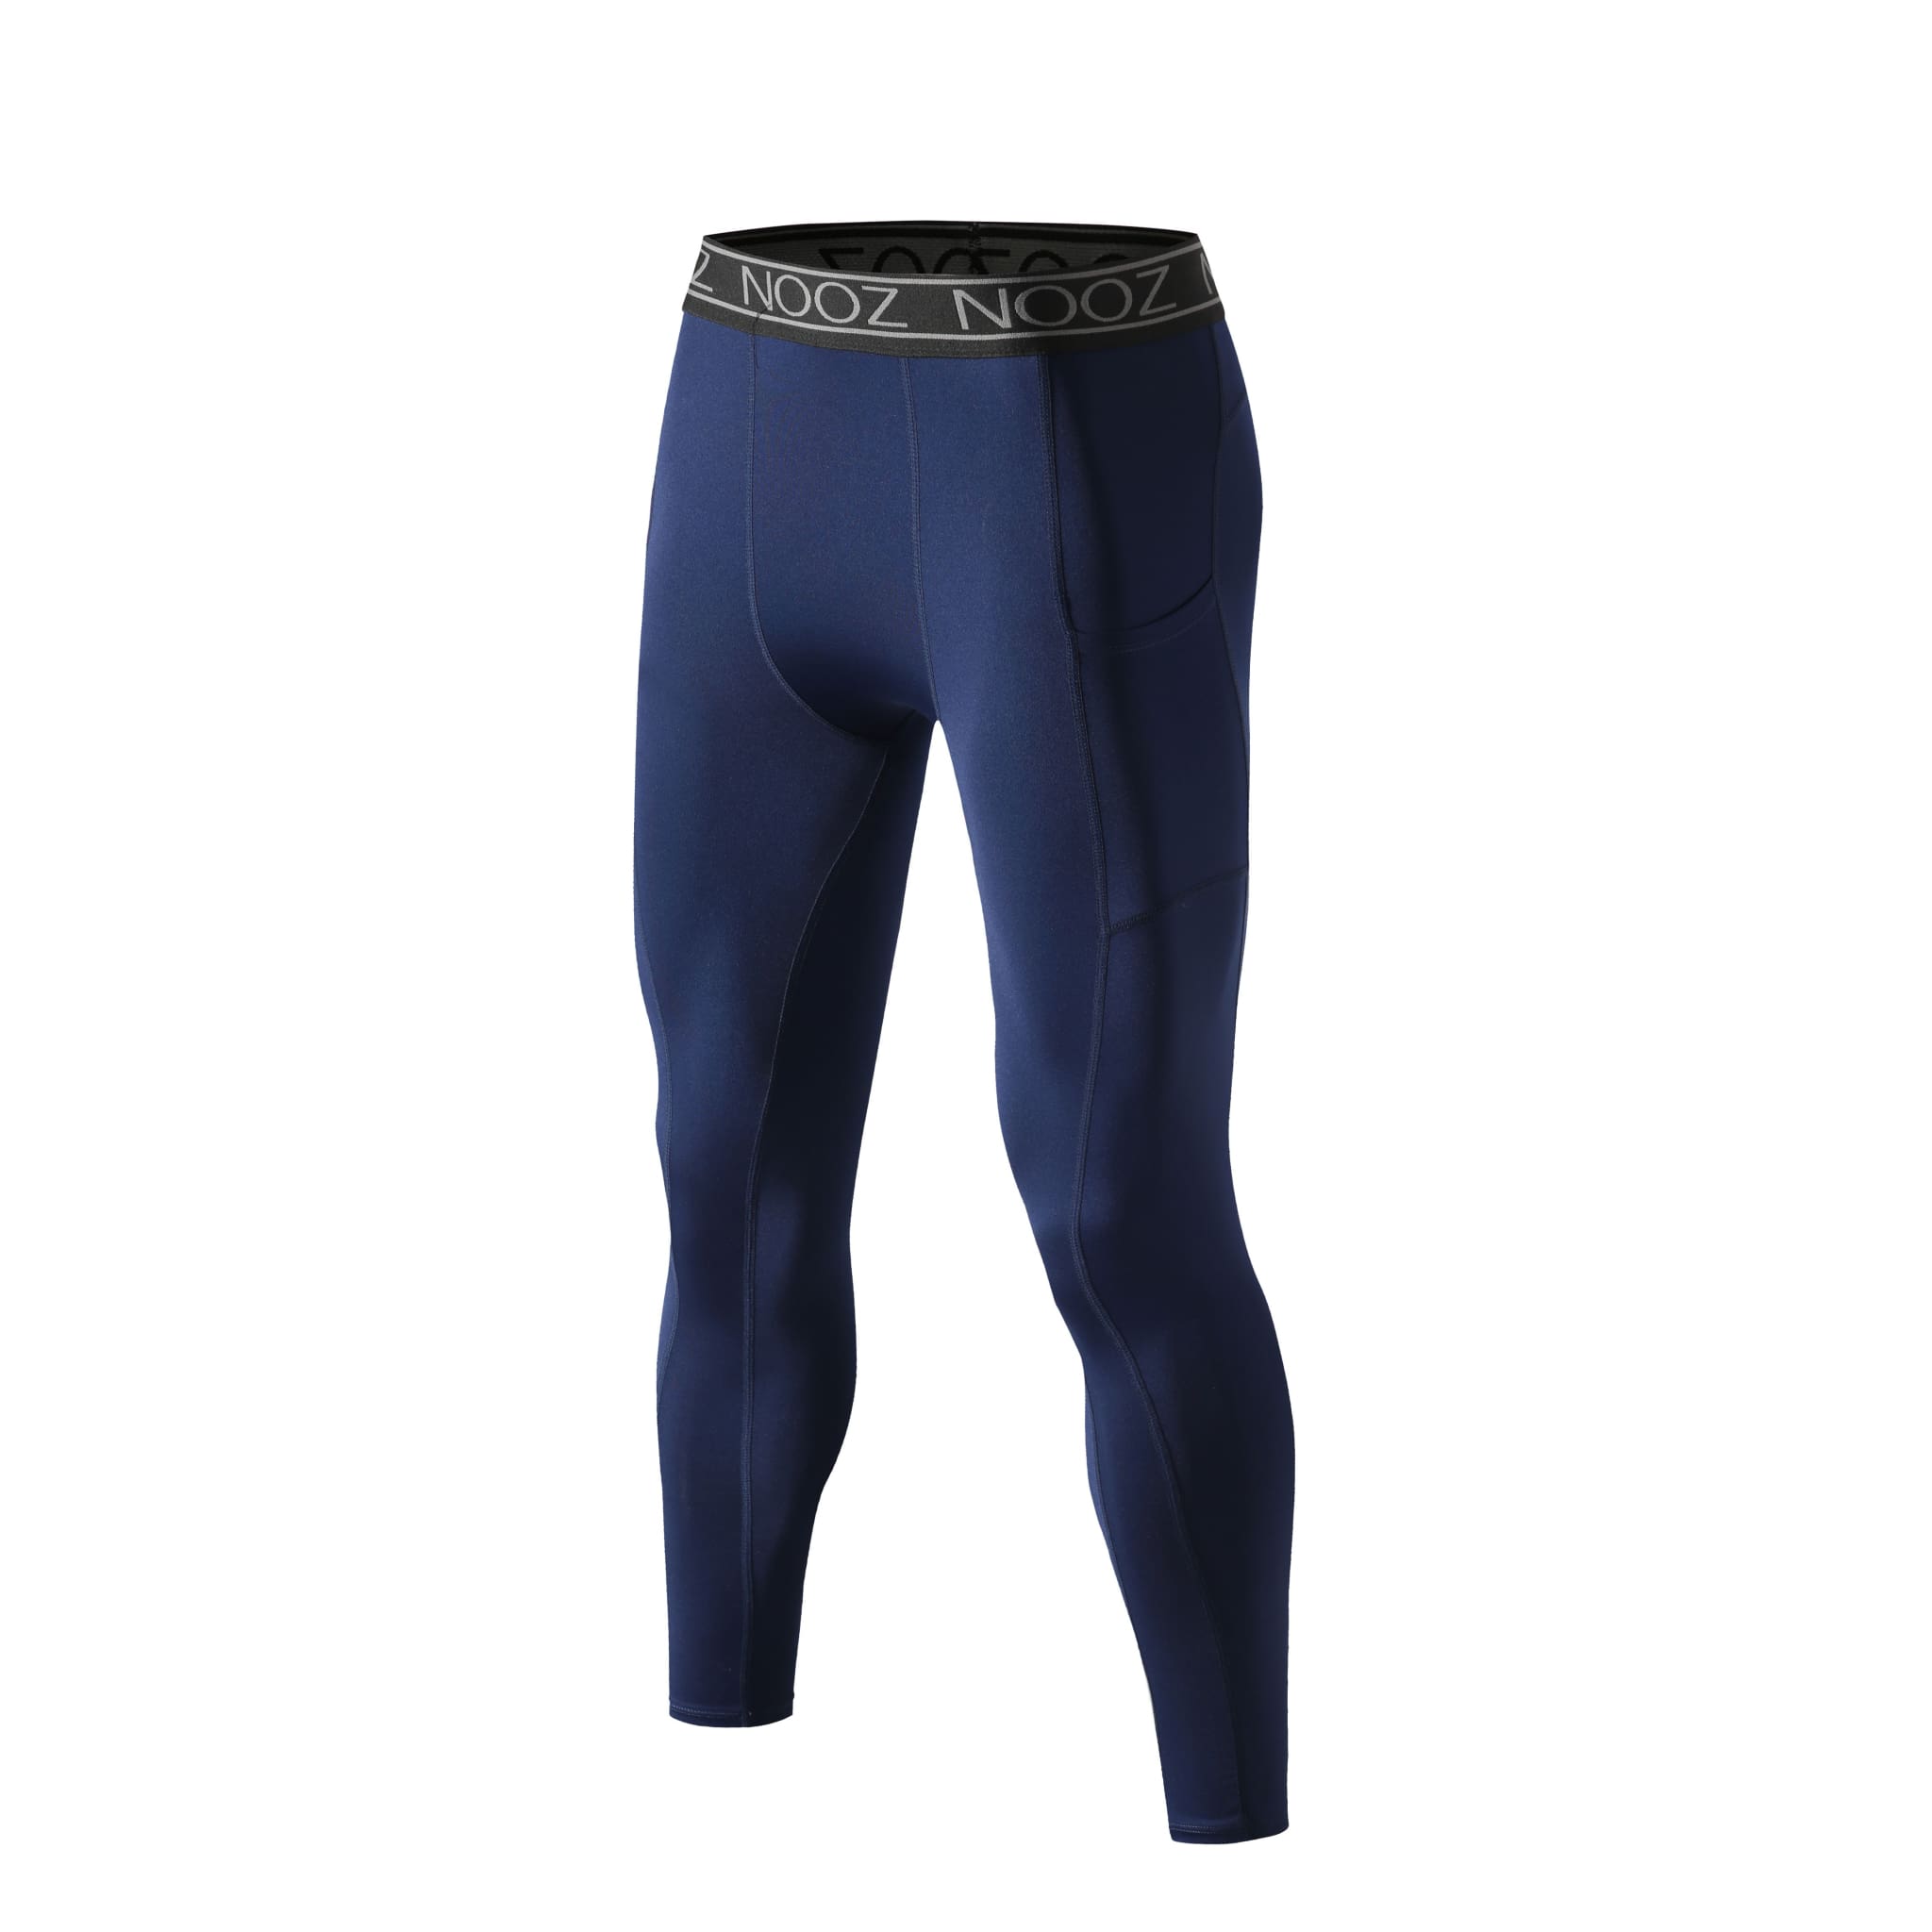 TSLA Men's 3/4 Compression Pants, Running Workout Tights, Cool Dry Capri  Athletic Leggings, Yoga Gym Base Layer